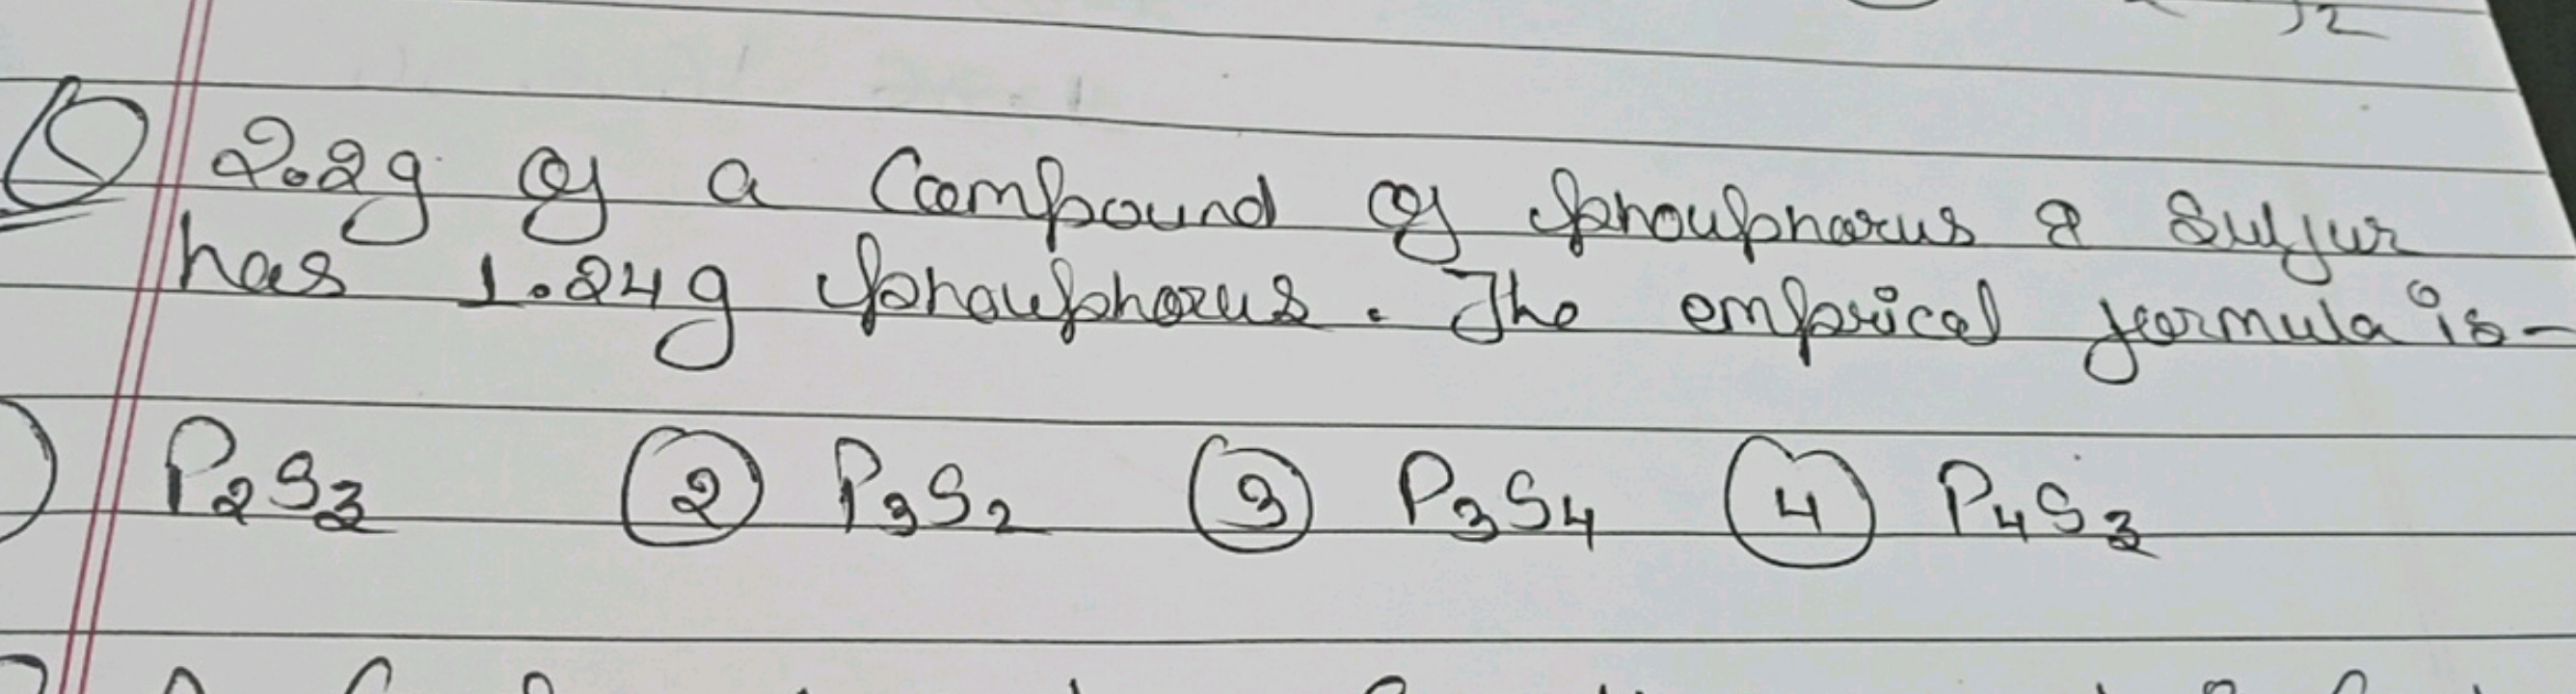 Q2.2g of a compound of shouphorus \& suyur has 1.24 g phavephous. The 